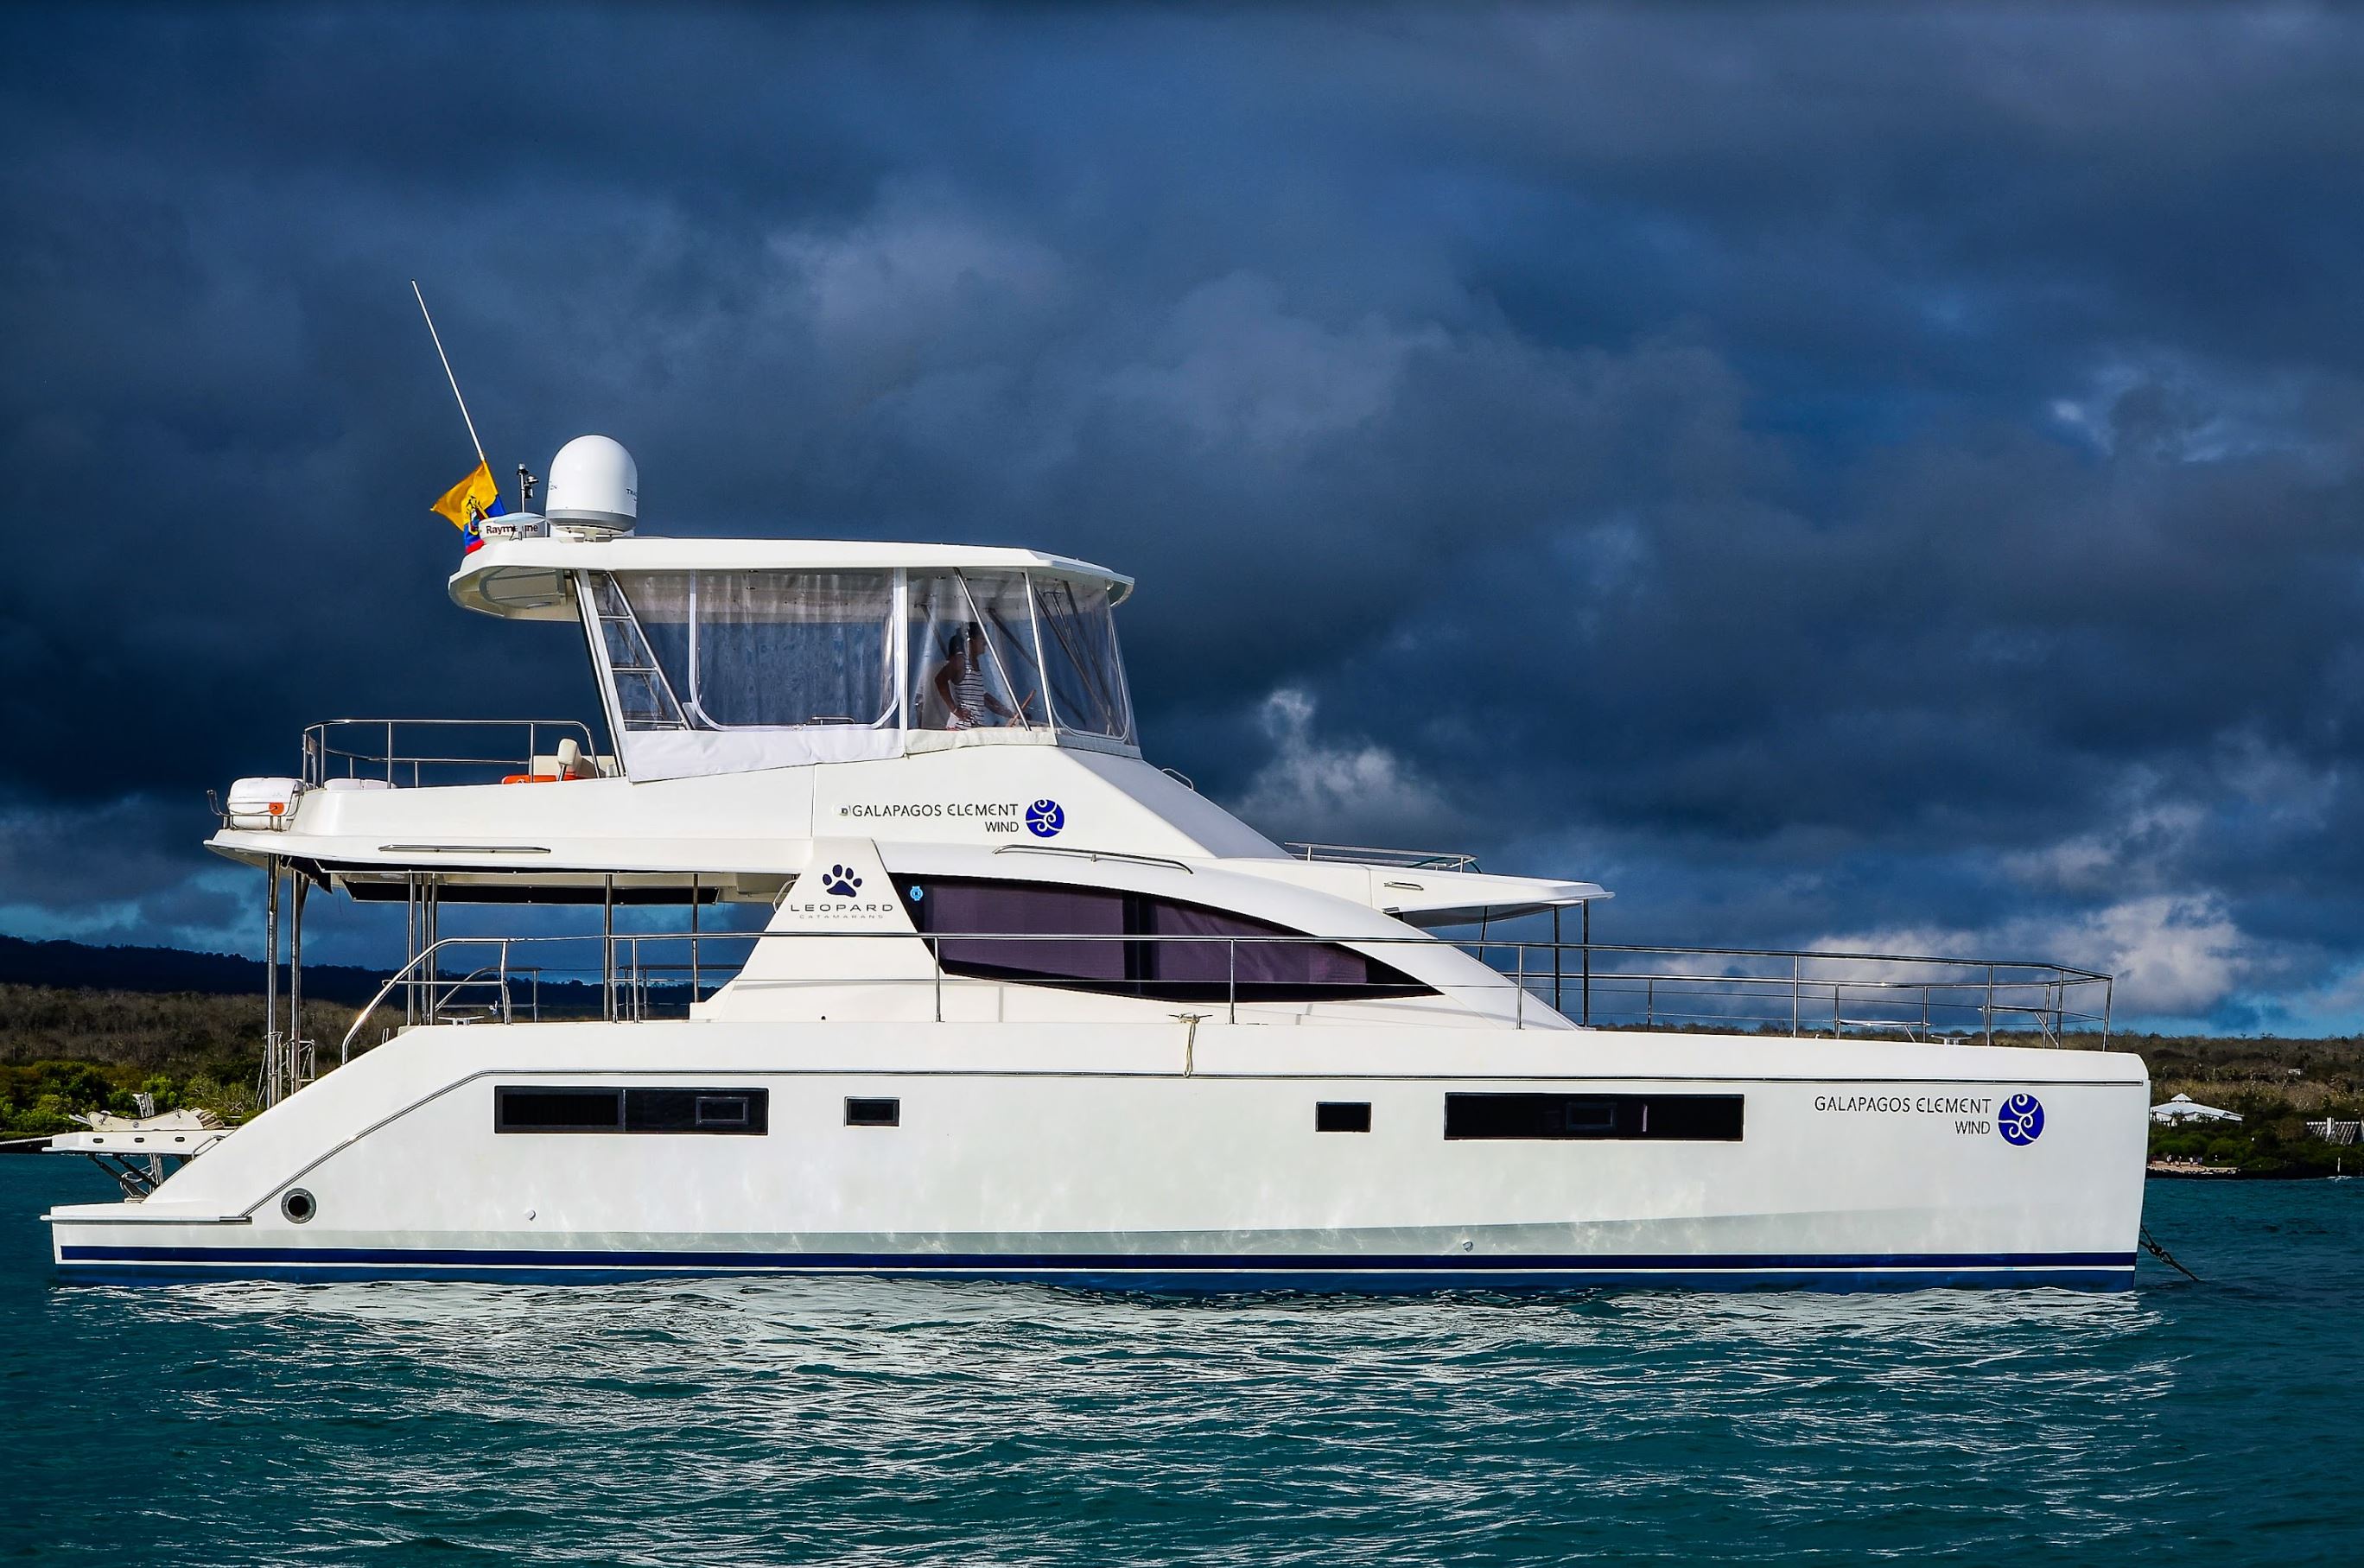 Galapagos Element Wind Yacht: Galapagos Element Wind Yacht, daily Galapagos tours to Floreana, Isabela or San Cristobal Island